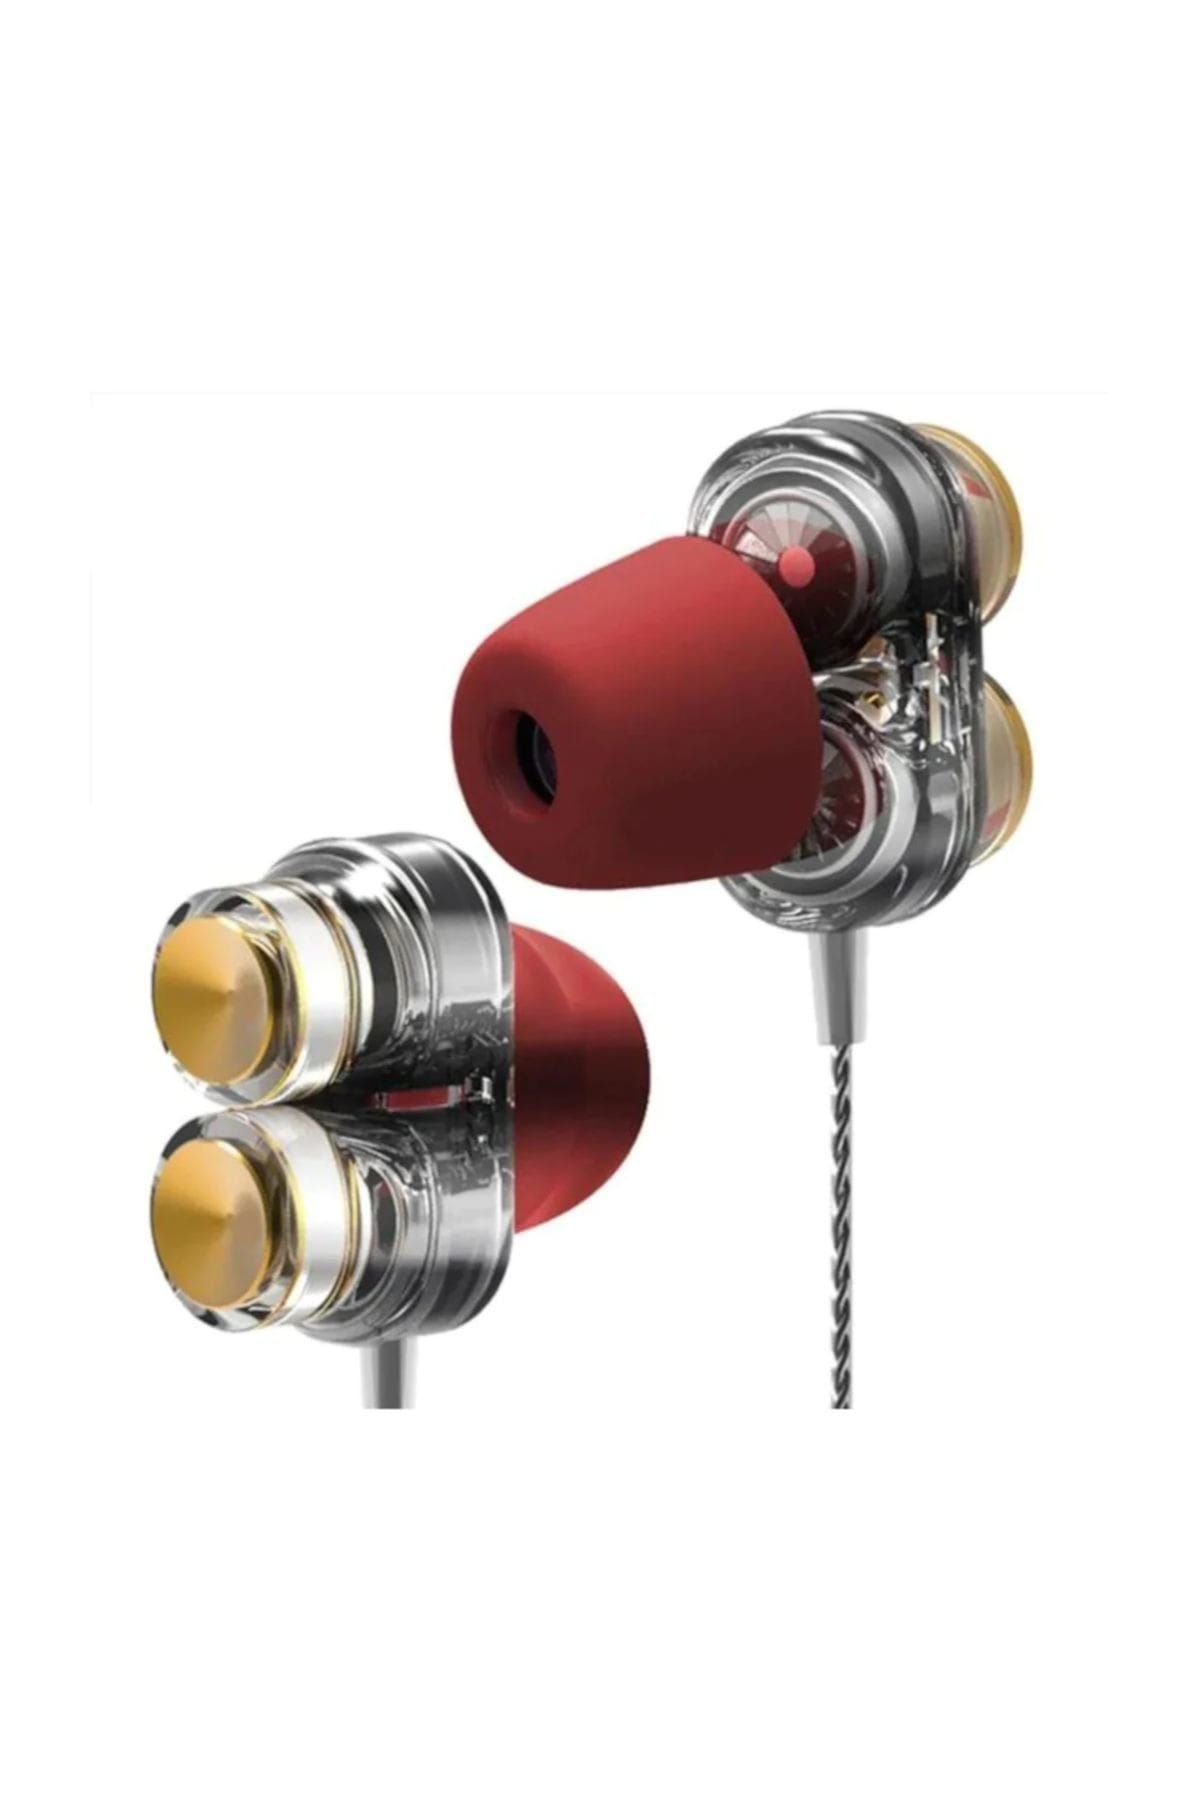 QKZ Full Hd Yüksek Performans Mikrofonlu 3.5mm 4 Çekirdekli Kulak İçi Kulaklık